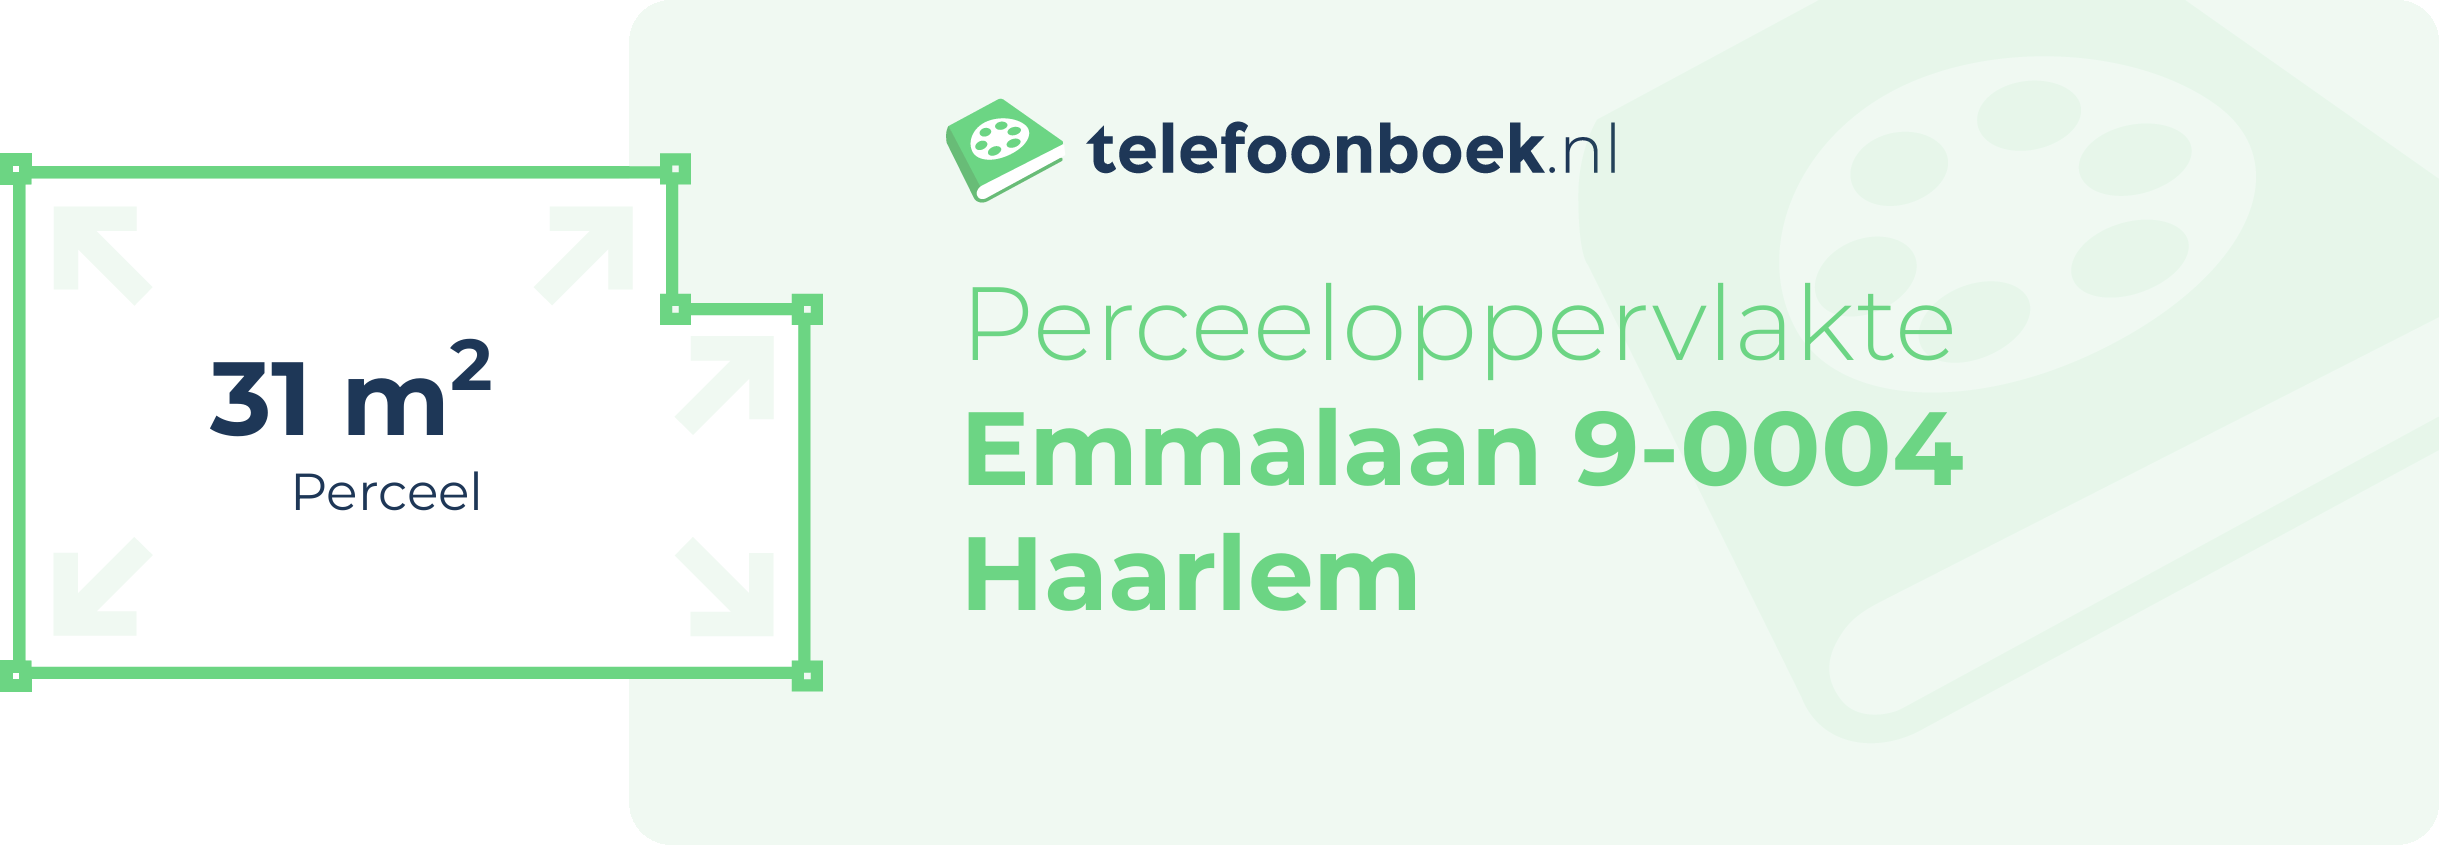 Perceeloppervlakte Emmalaan 9-0004 Haarlem